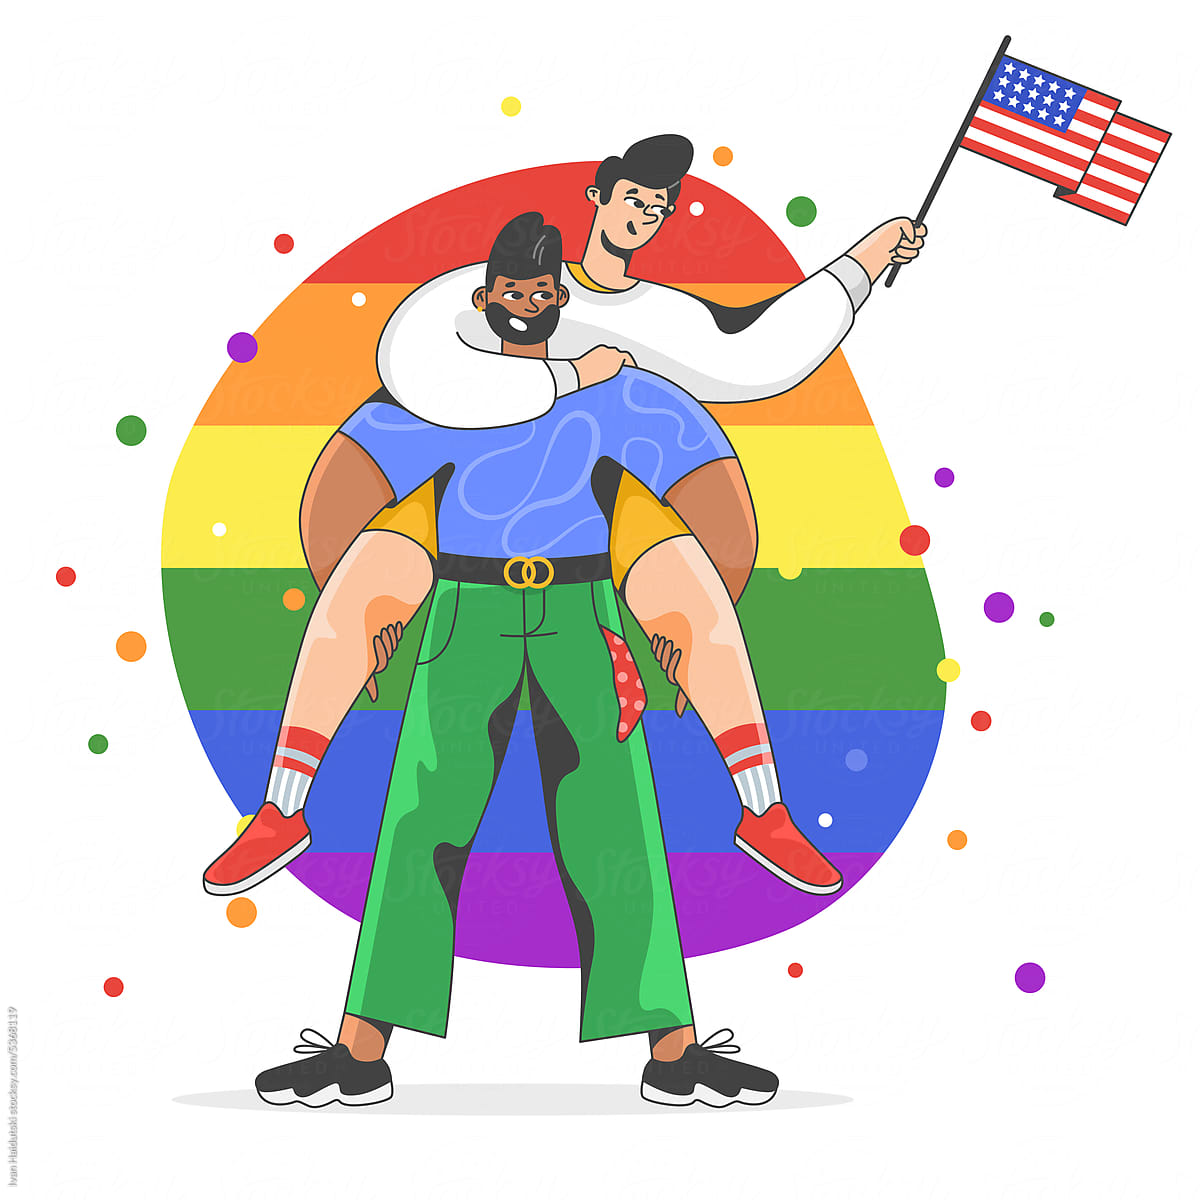 Diverse gay couple hugging holding USA flag celebrating